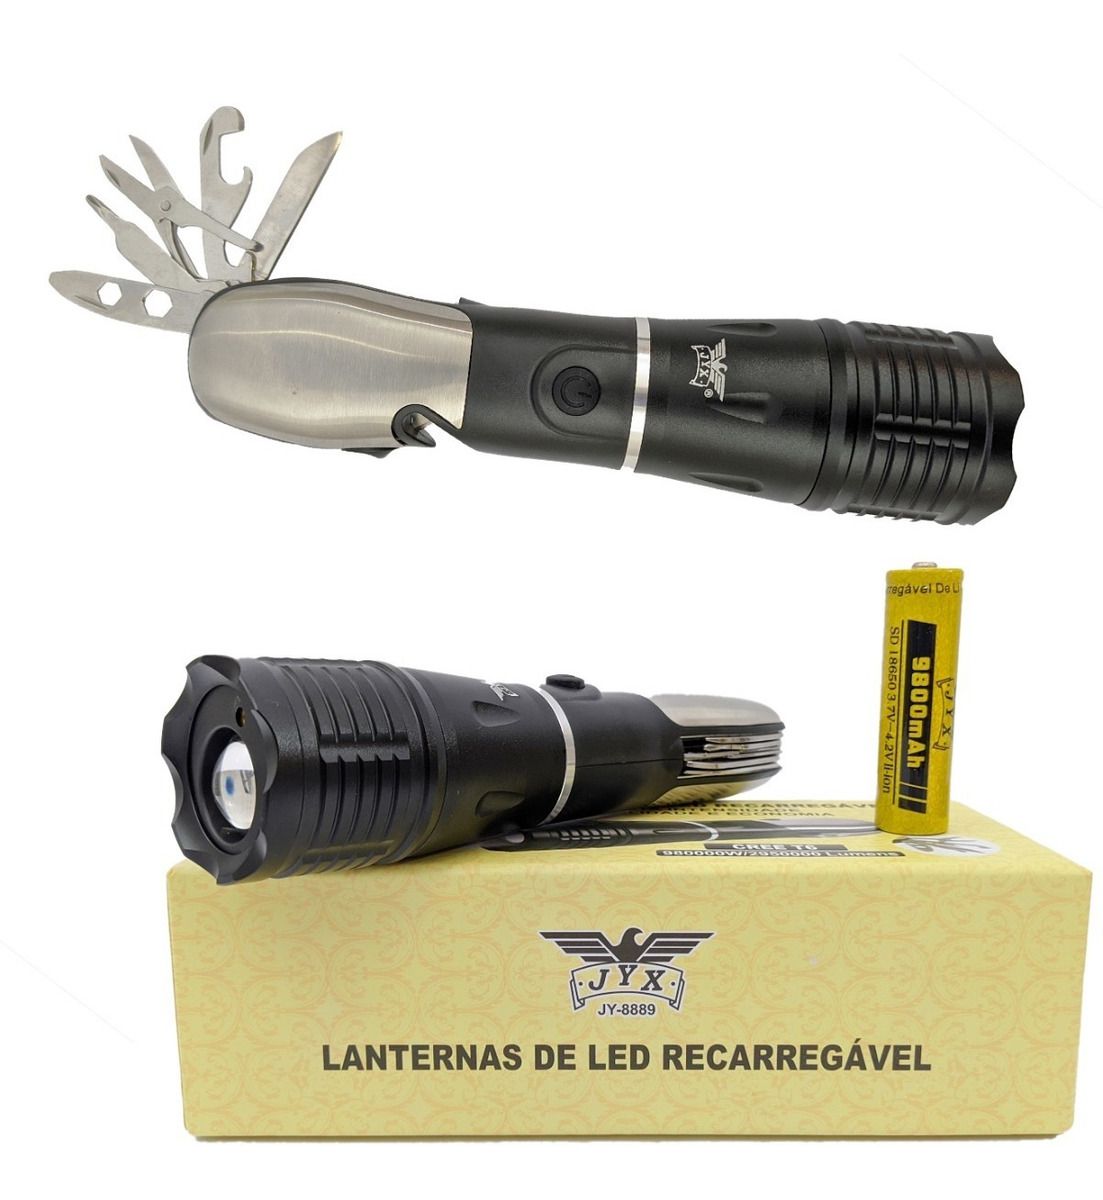 Lanterna T6 C/ Mira Laser E Canivete Multifuncional - Febre do Aço